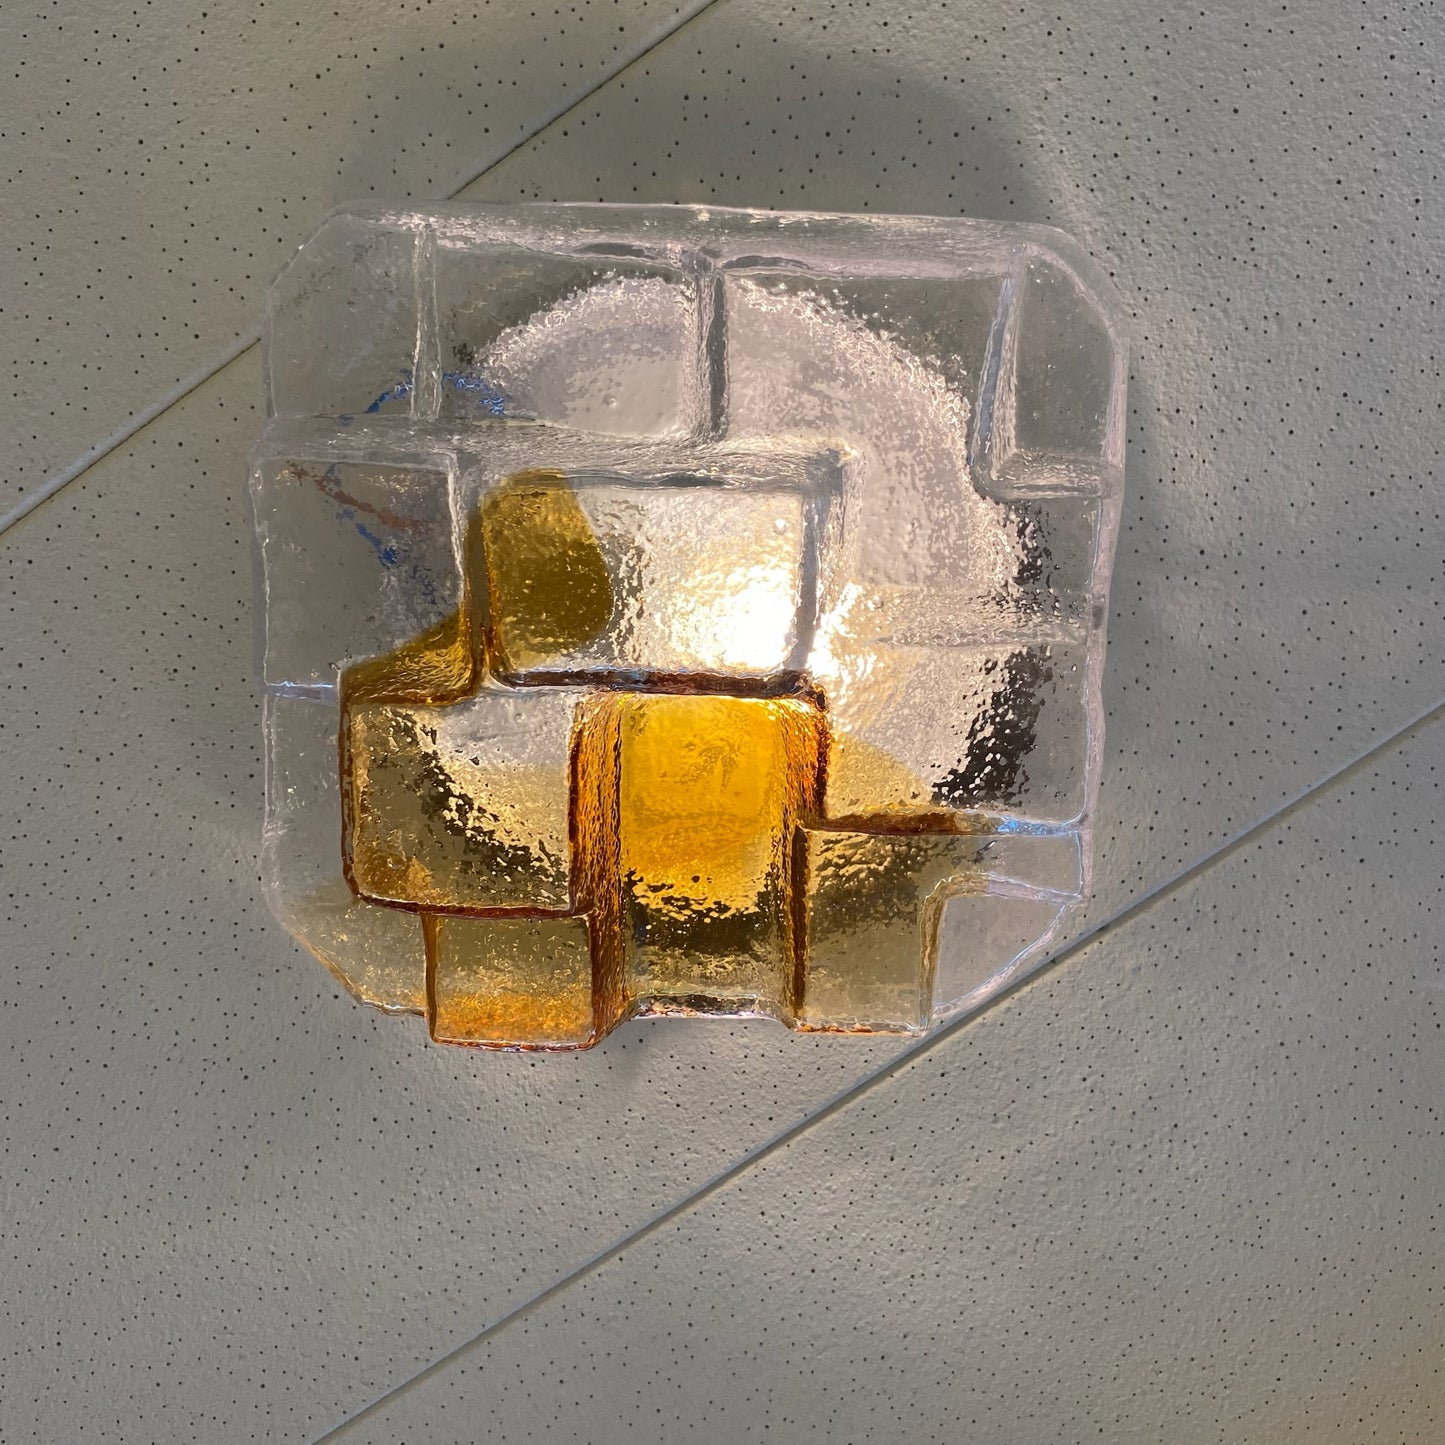 Italiaanse kubusvormige plafondlamp van matglas